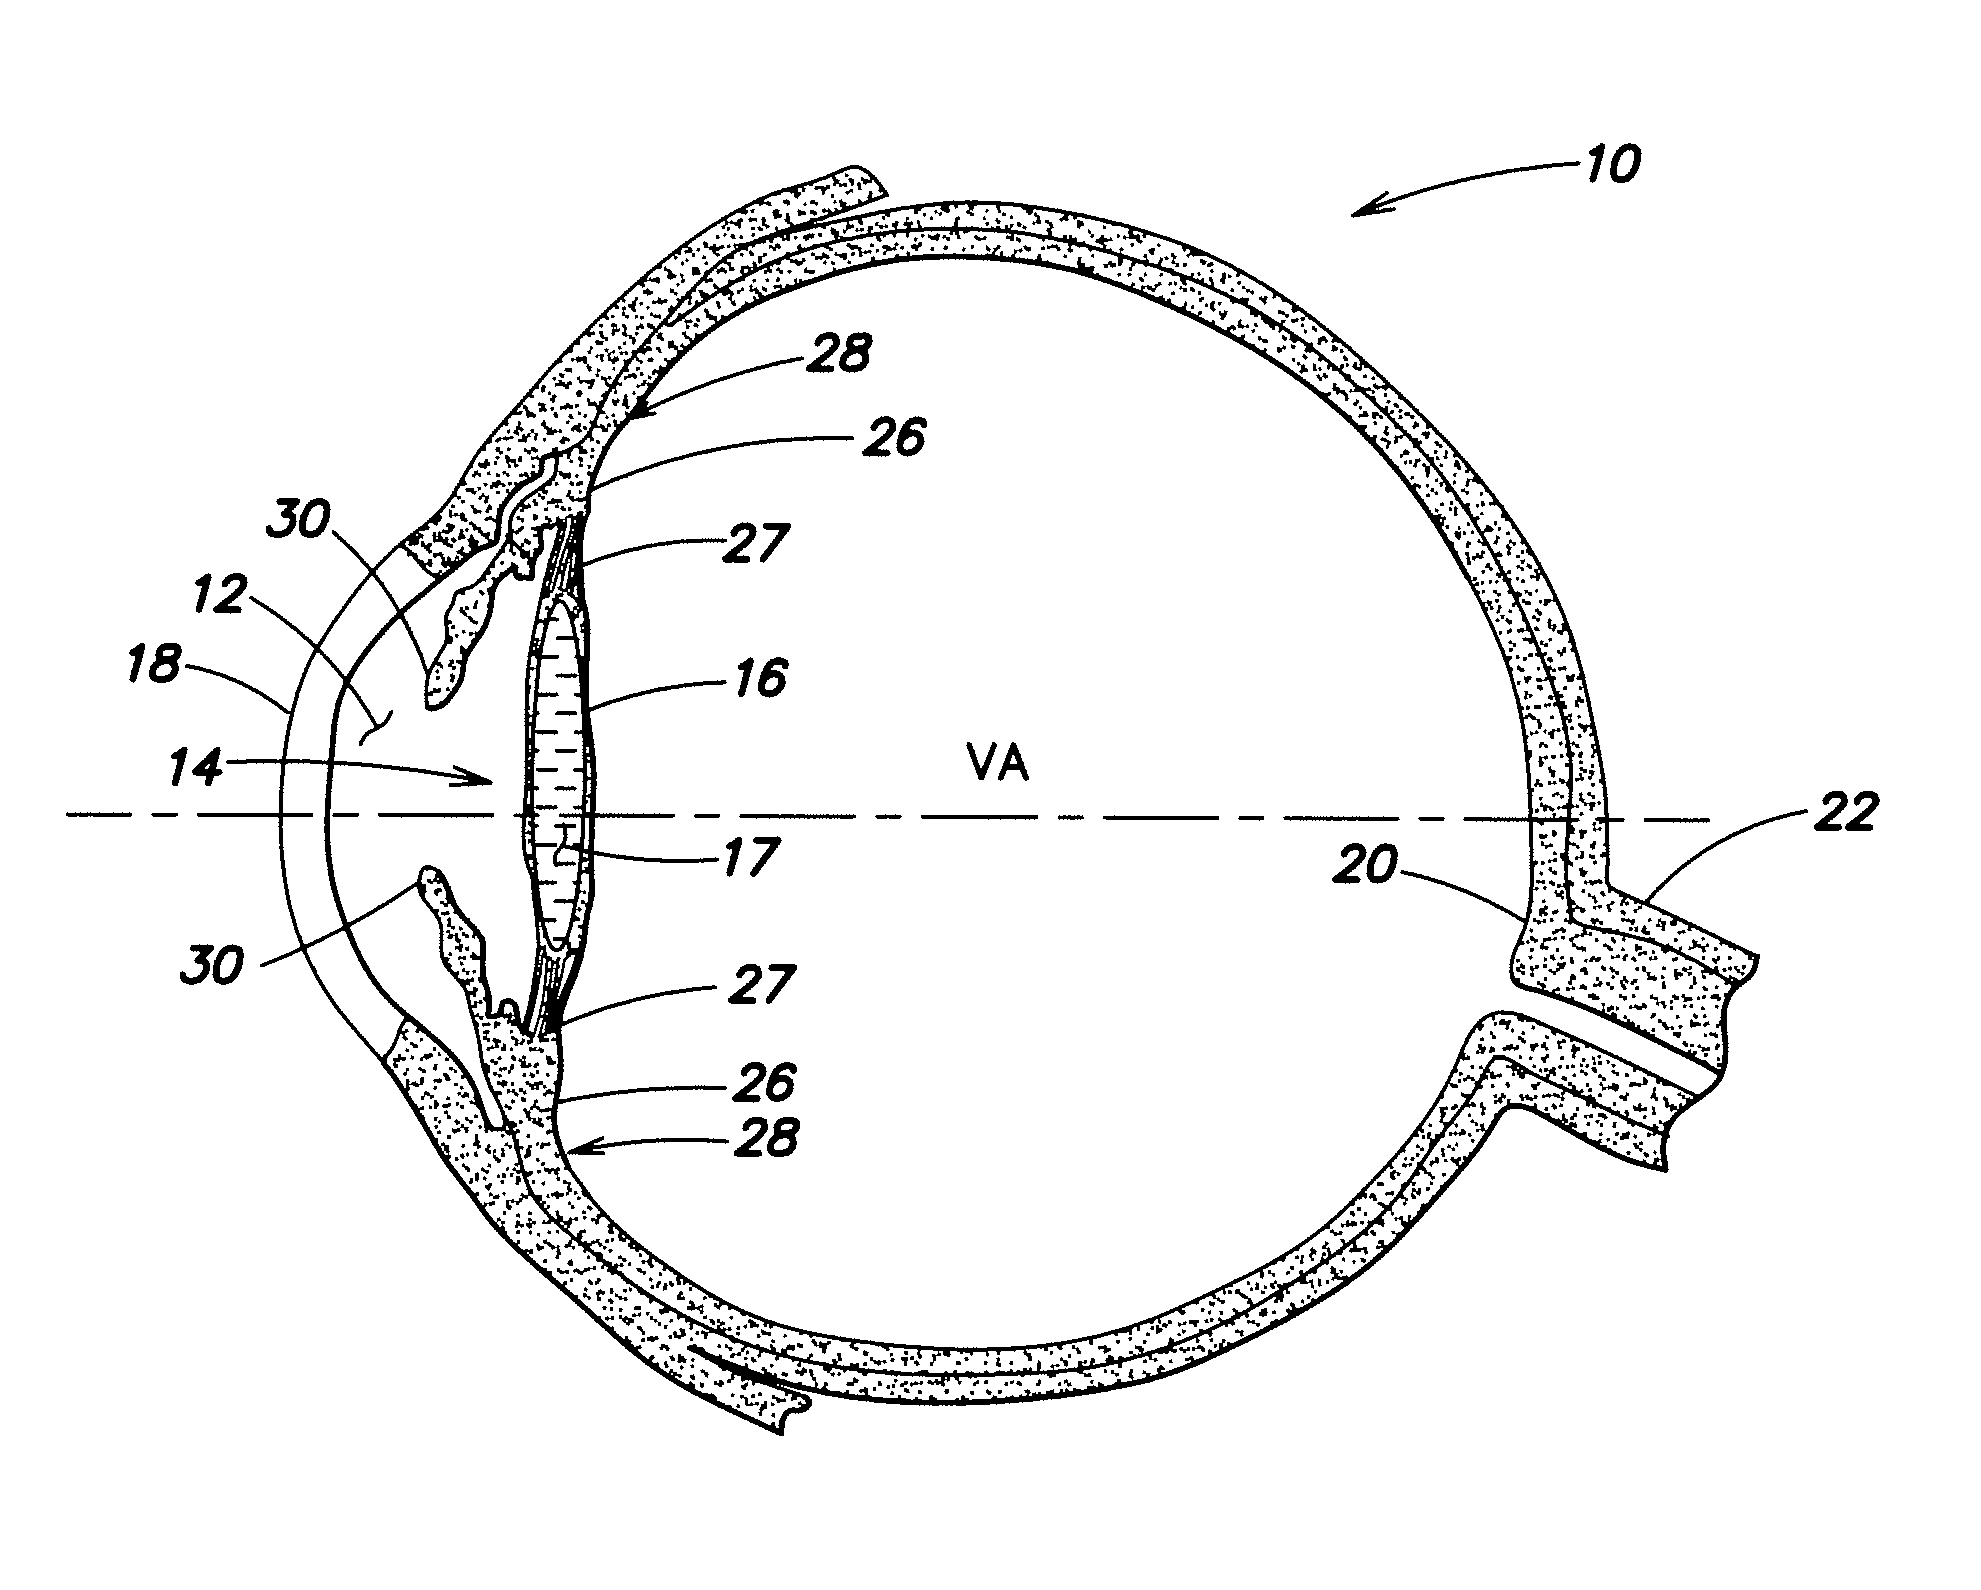 Multi-element accommodative intraocular lens